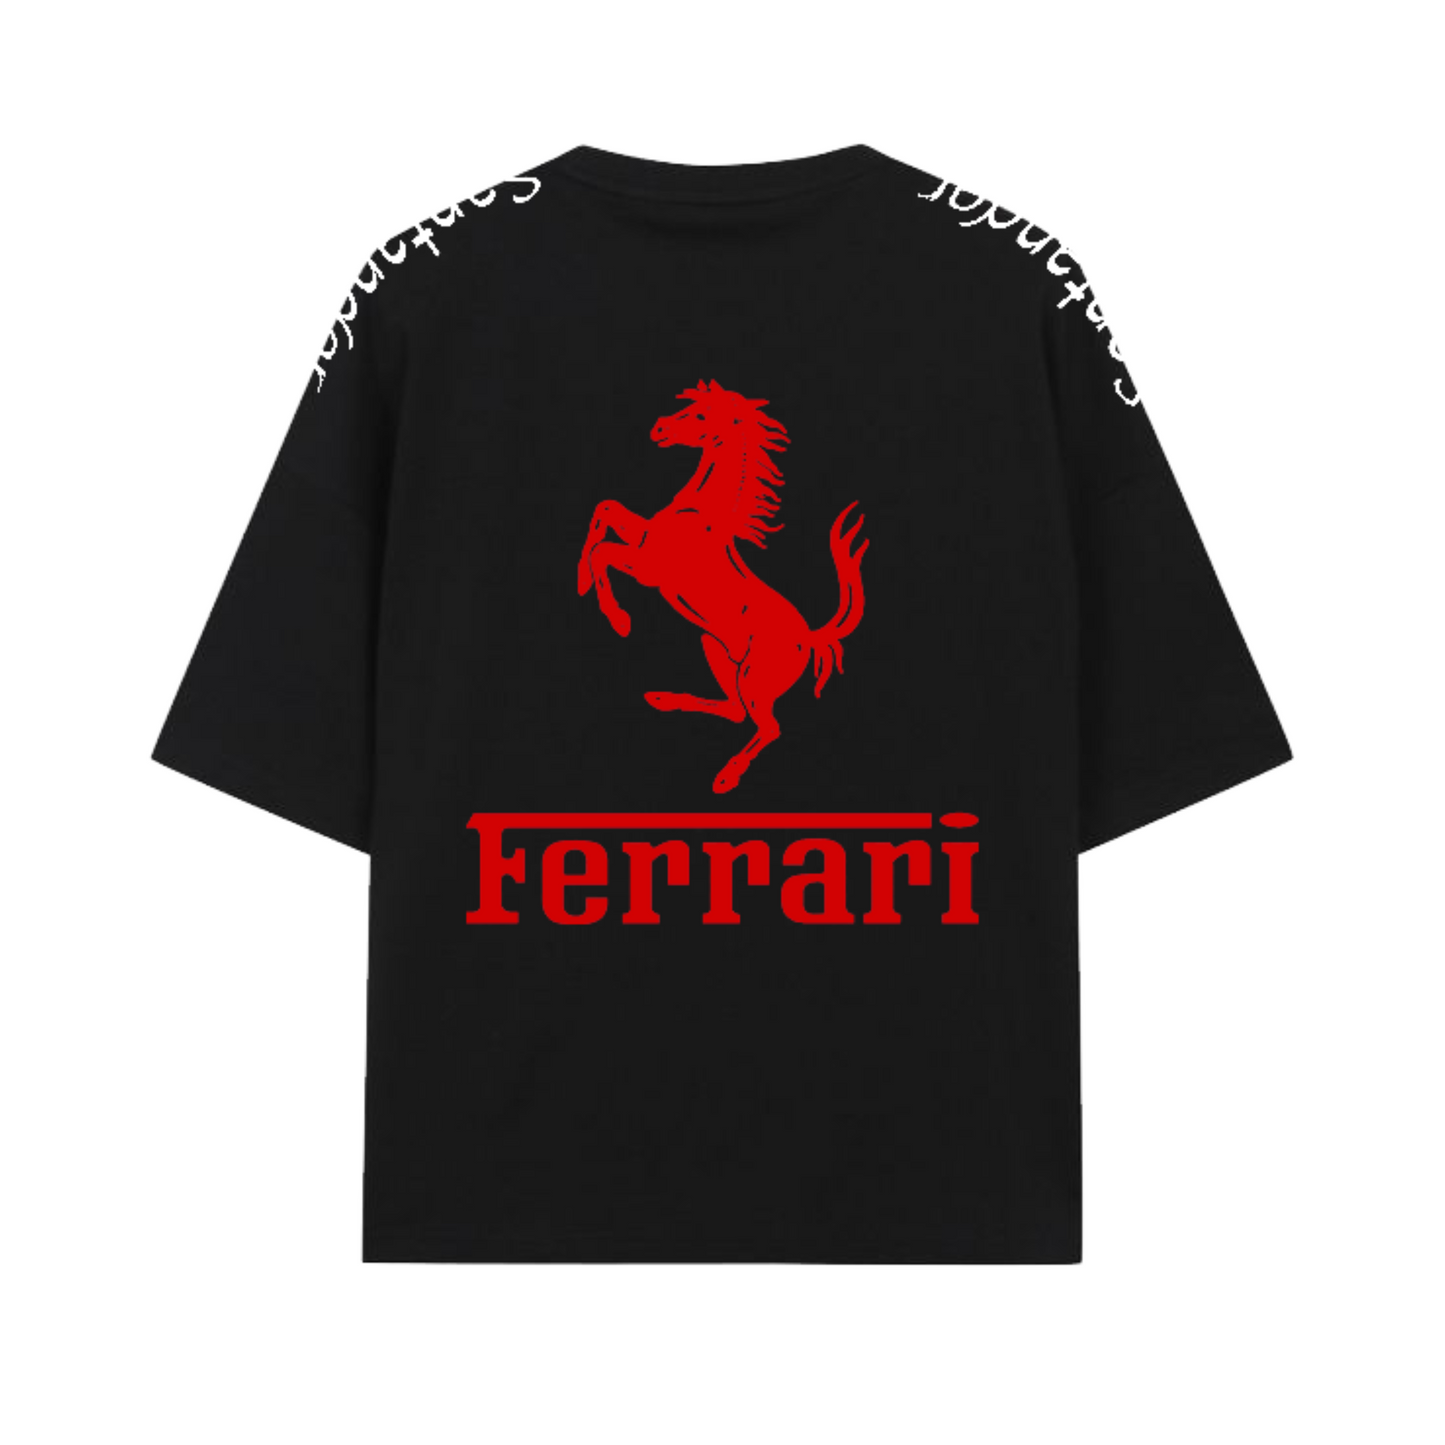 Ferrari F1 tee